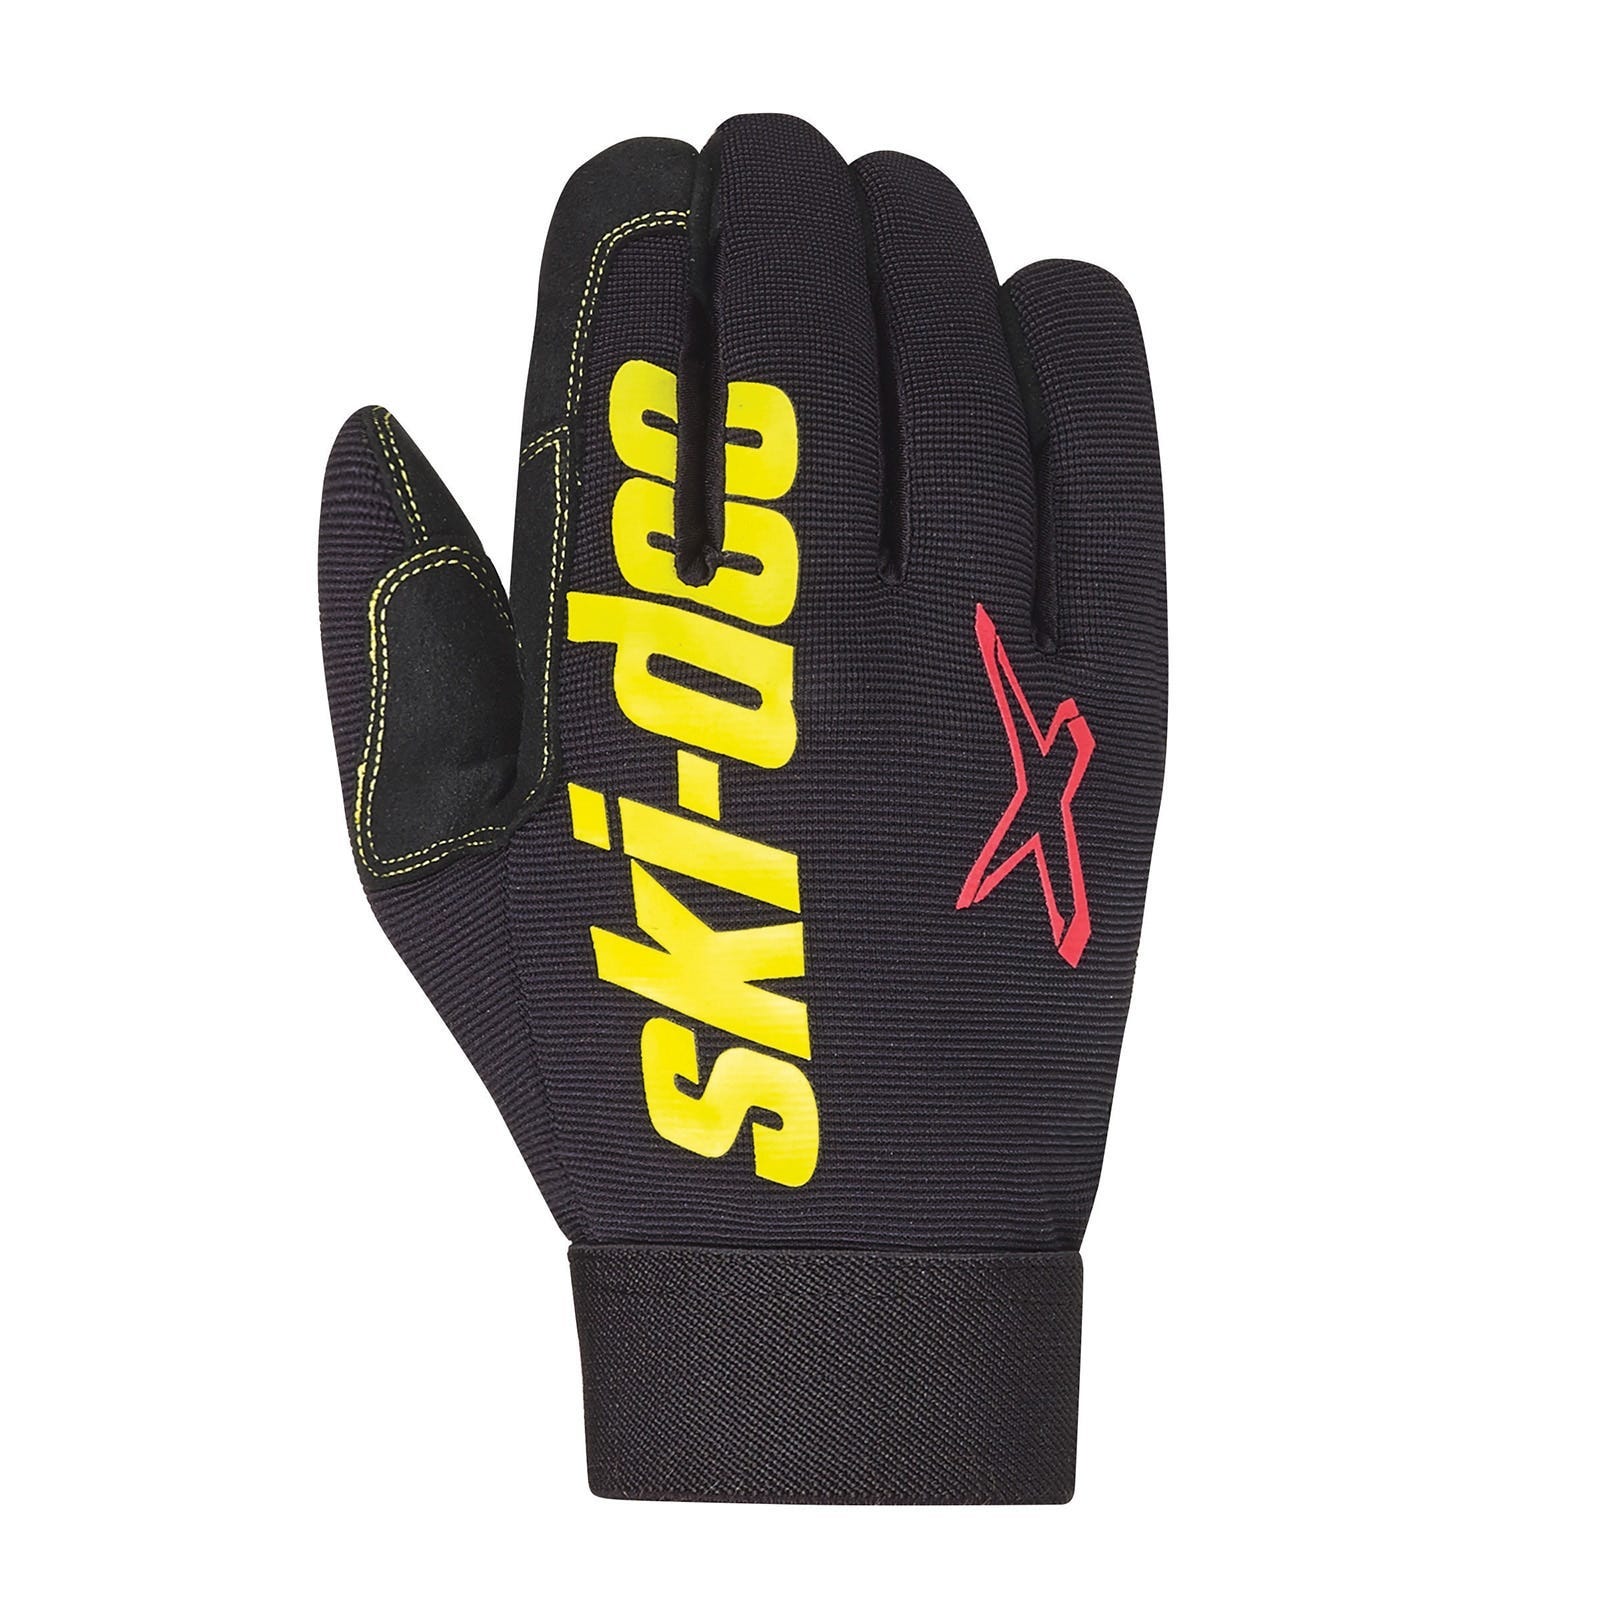 Ski-Doo Men's X-Team Crew Gloves